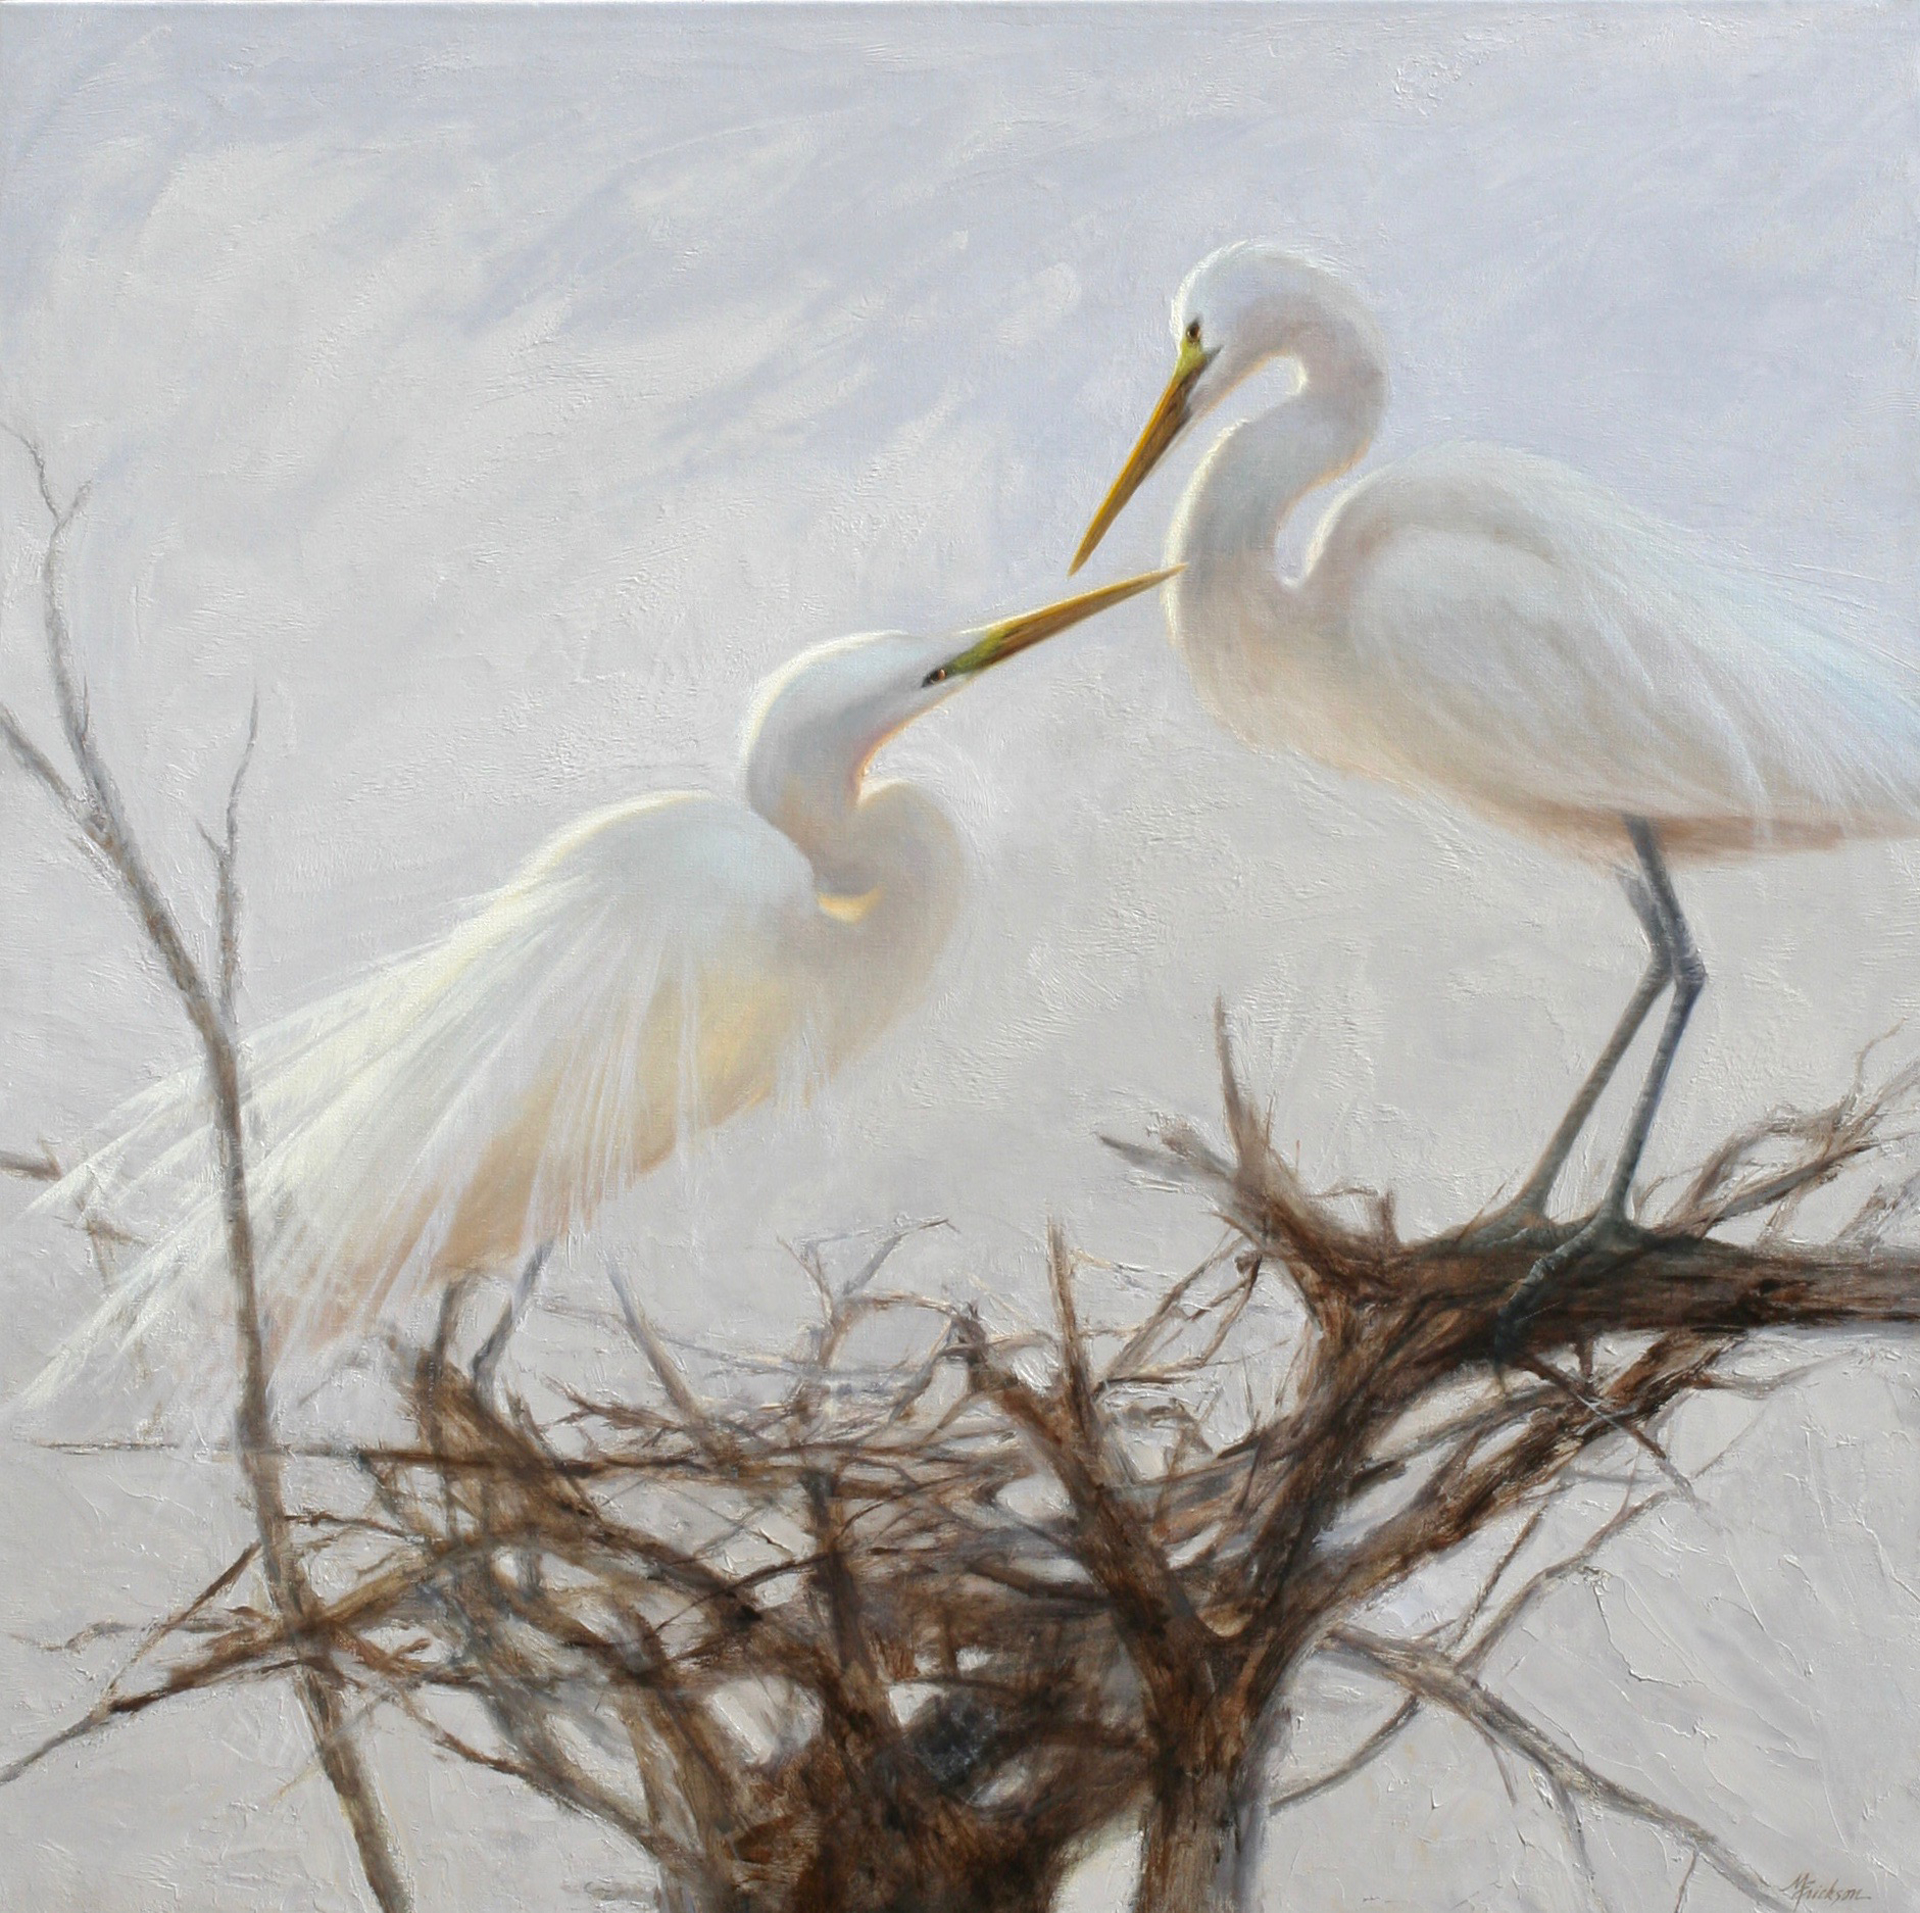 Nesting Egrets by Mary Erickson